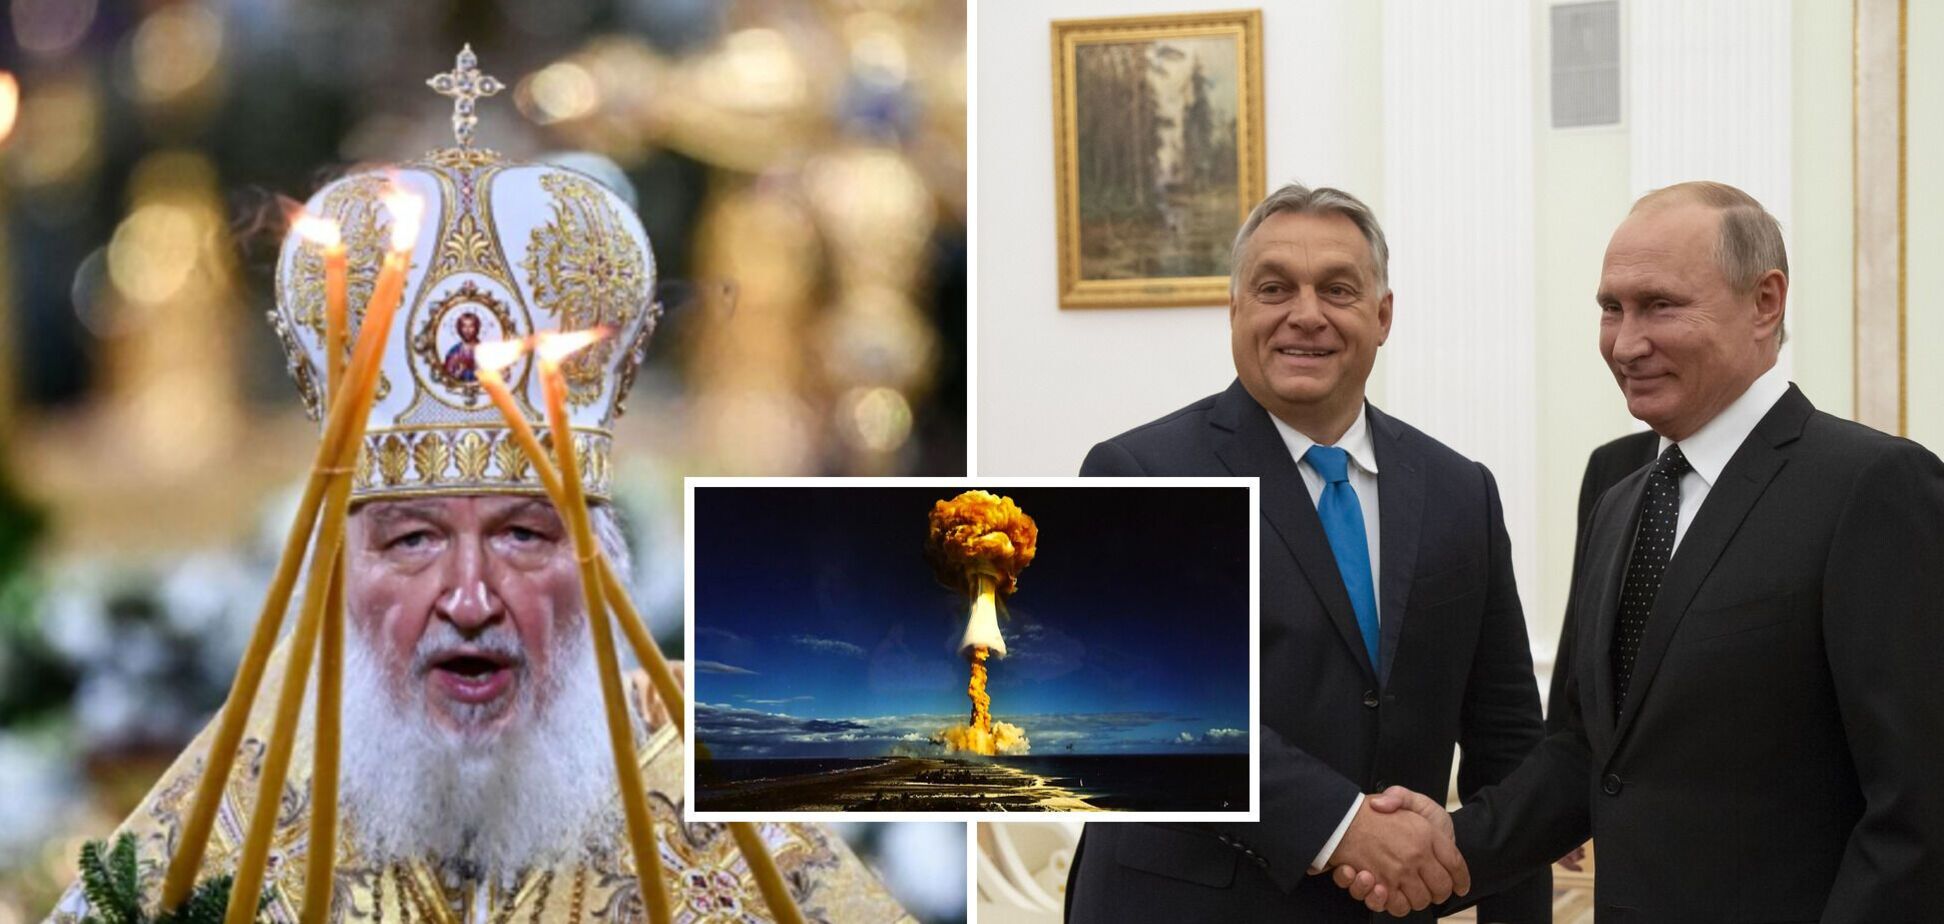 Кирилл благословил ядерку, а Орбан – терроризм: оба заслуживают Путина